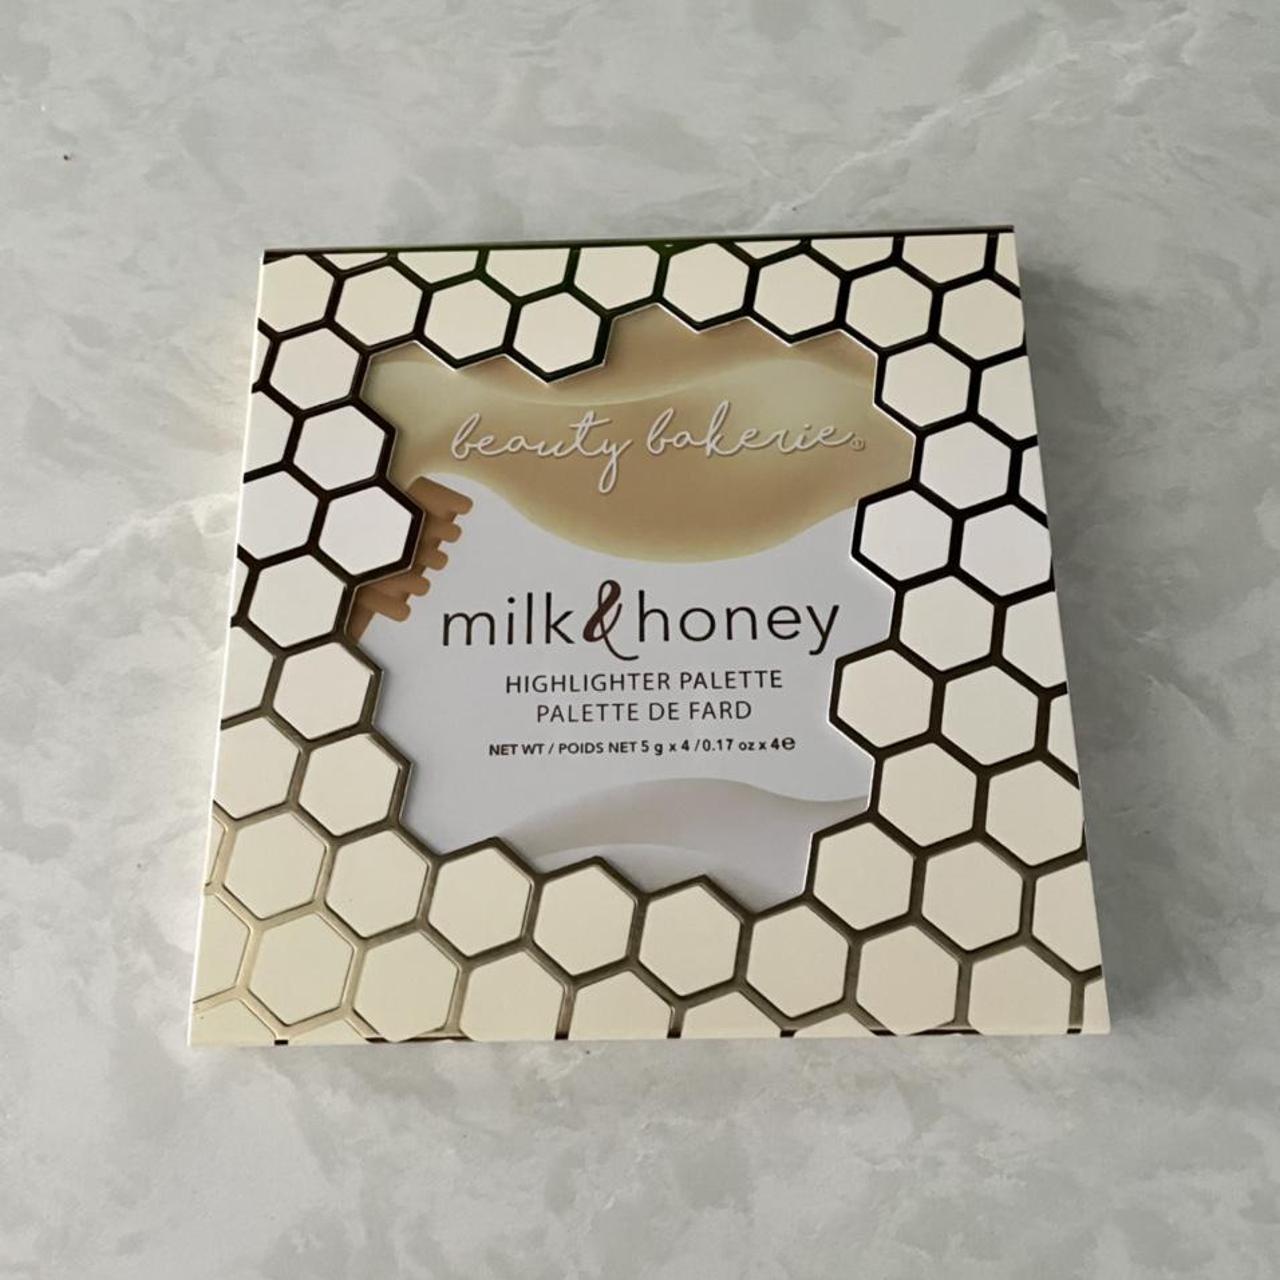 Product Image 2 - Beauty bakery milk & honey